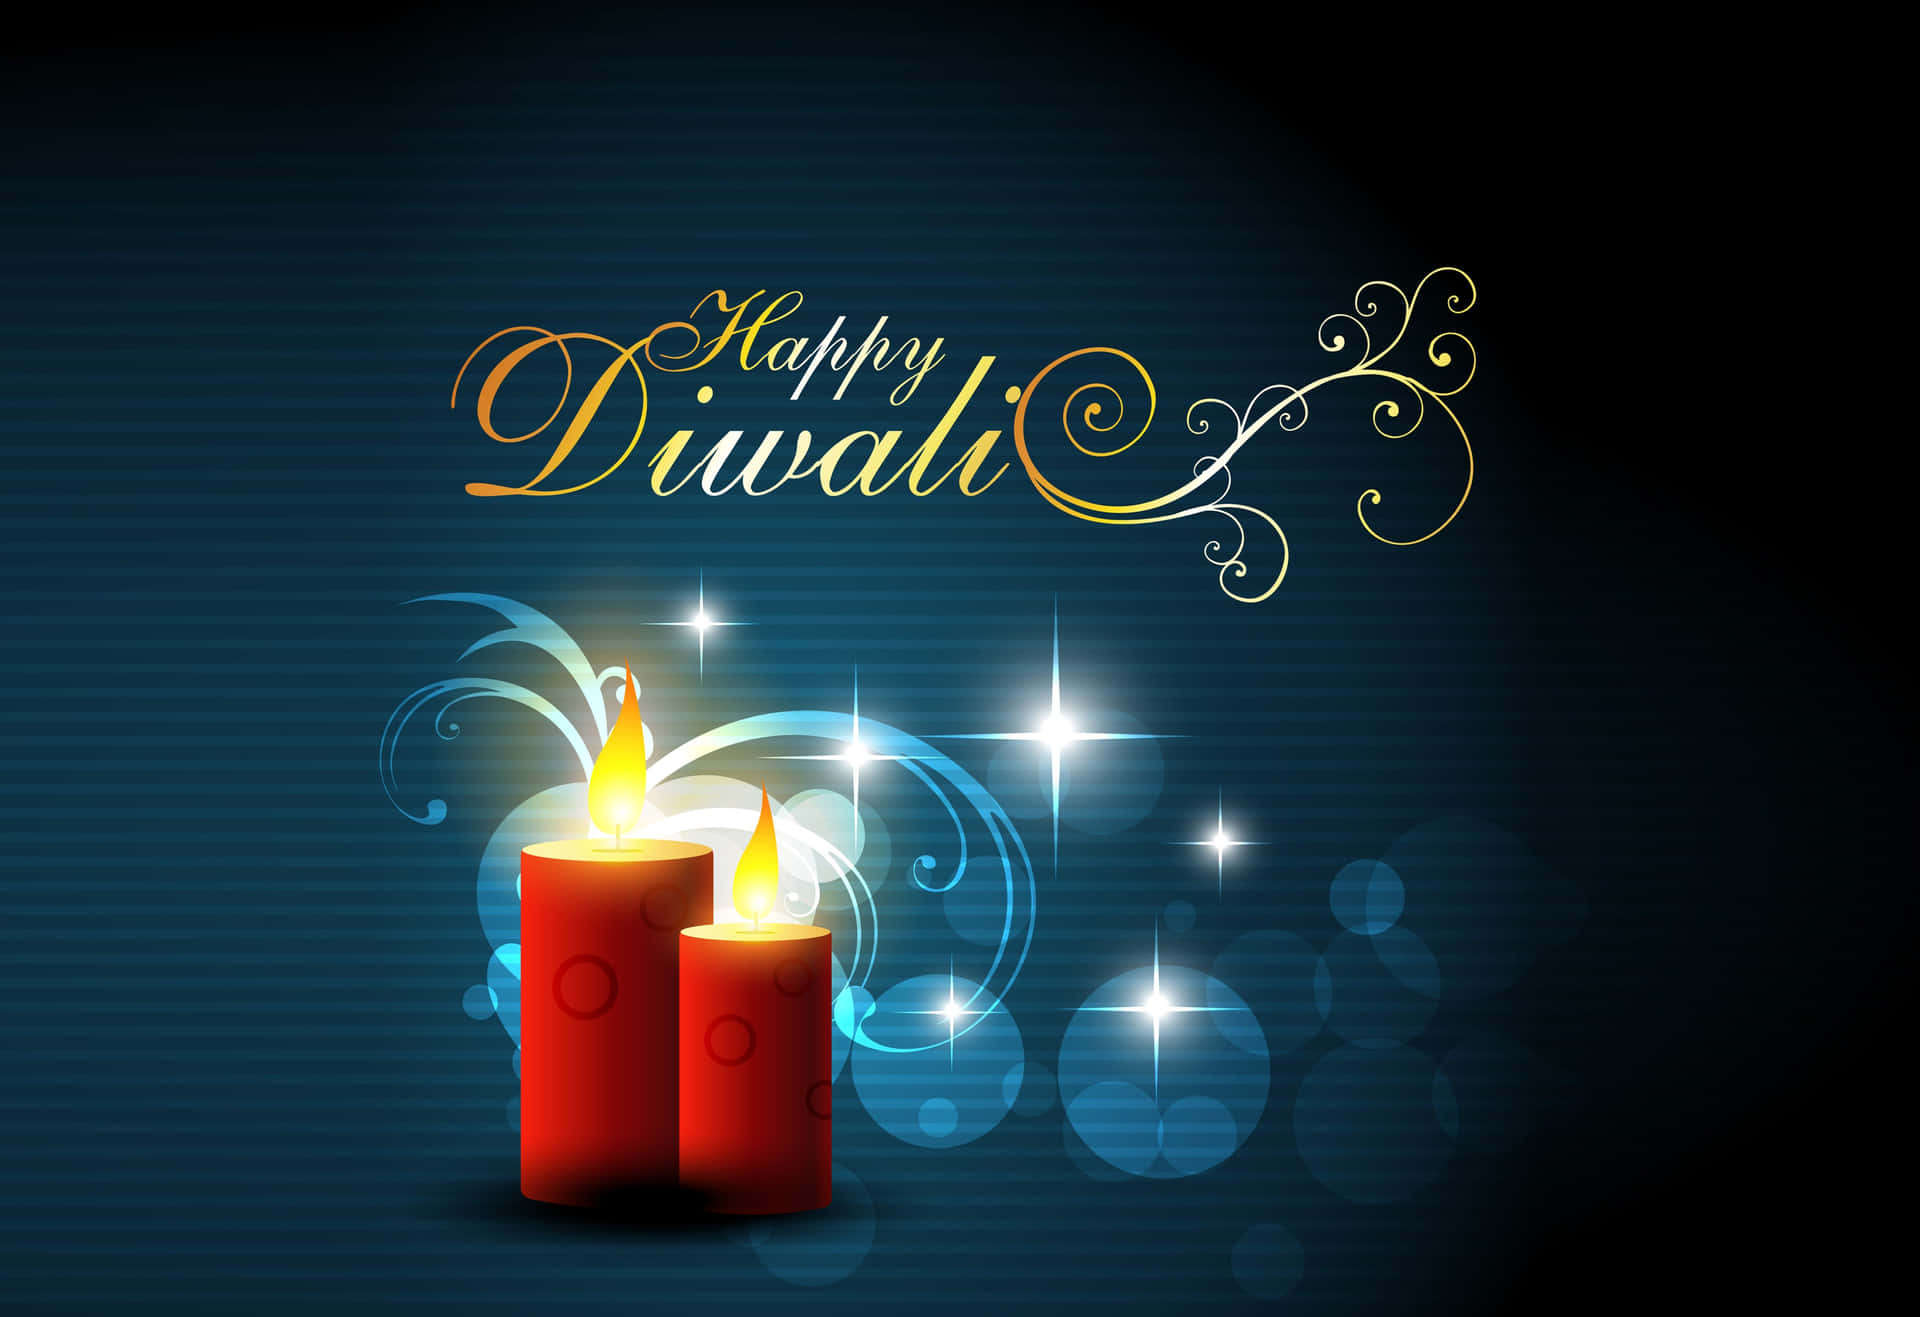 Ønskerdig En Glædelig Diwali!